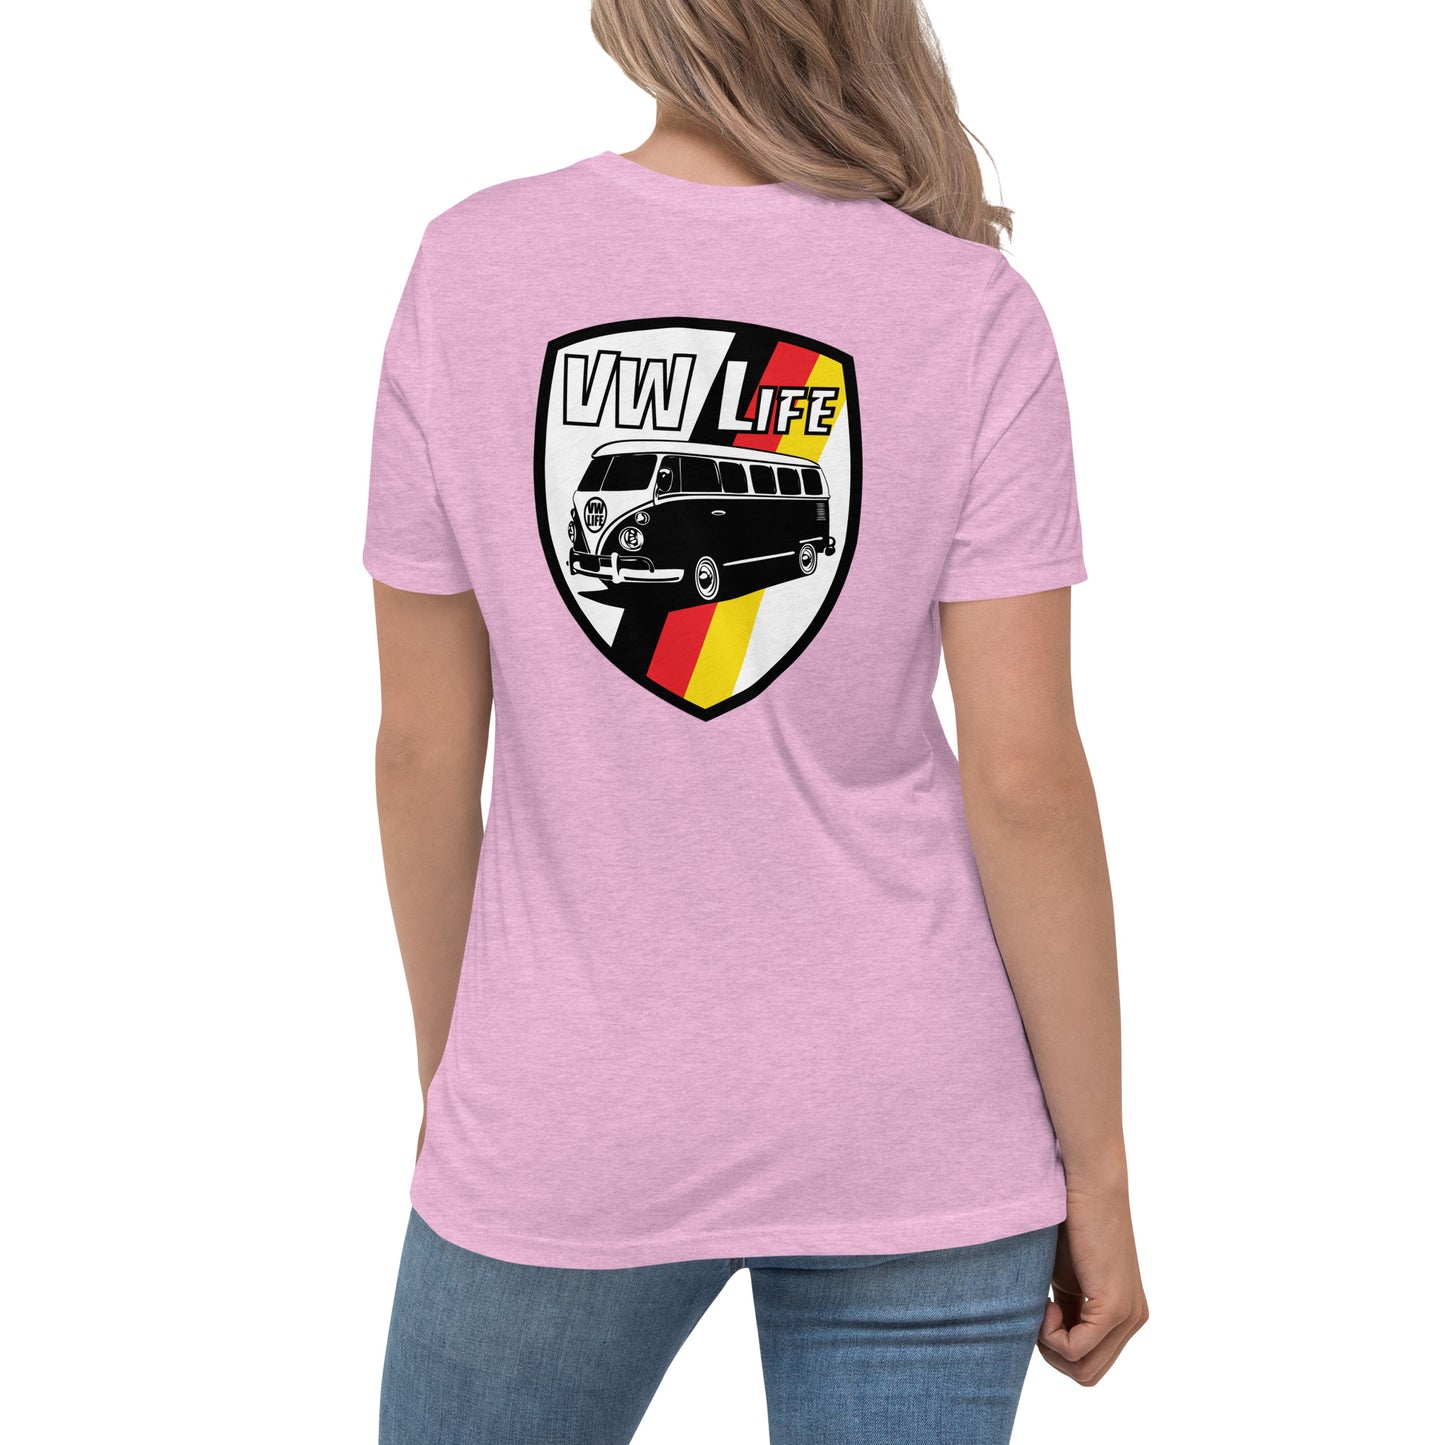 VWLIFE Women's Split Bus T-shirt